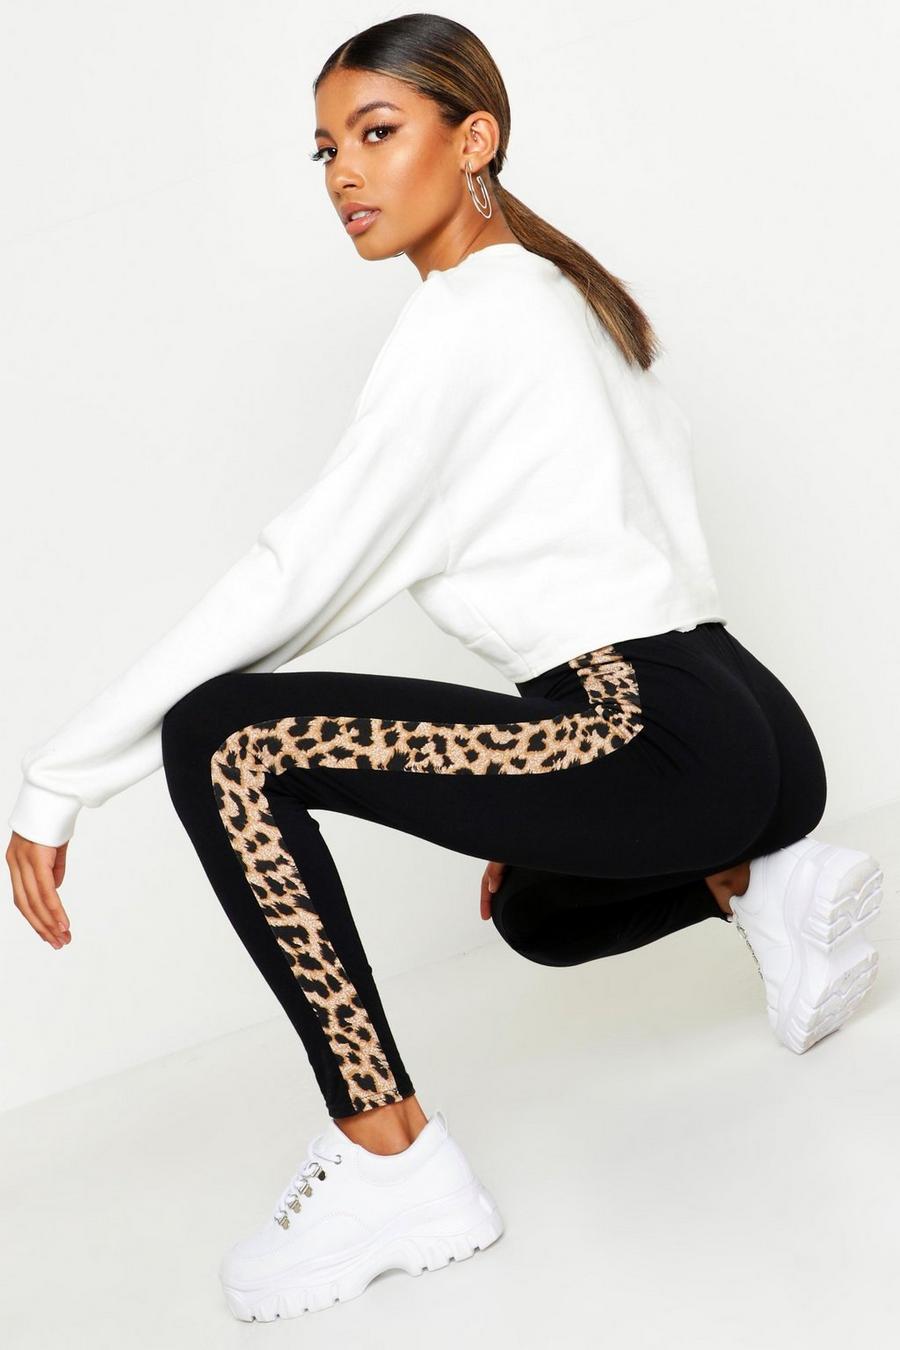 https://media.boohoo.com/i/boohoo/fzz88423_black_xl/female-black-leopard-print-side-stripe-leggings/?w=900&qlt=default&fmt.jp2.qlt=70&fmt=auto&sm=fit